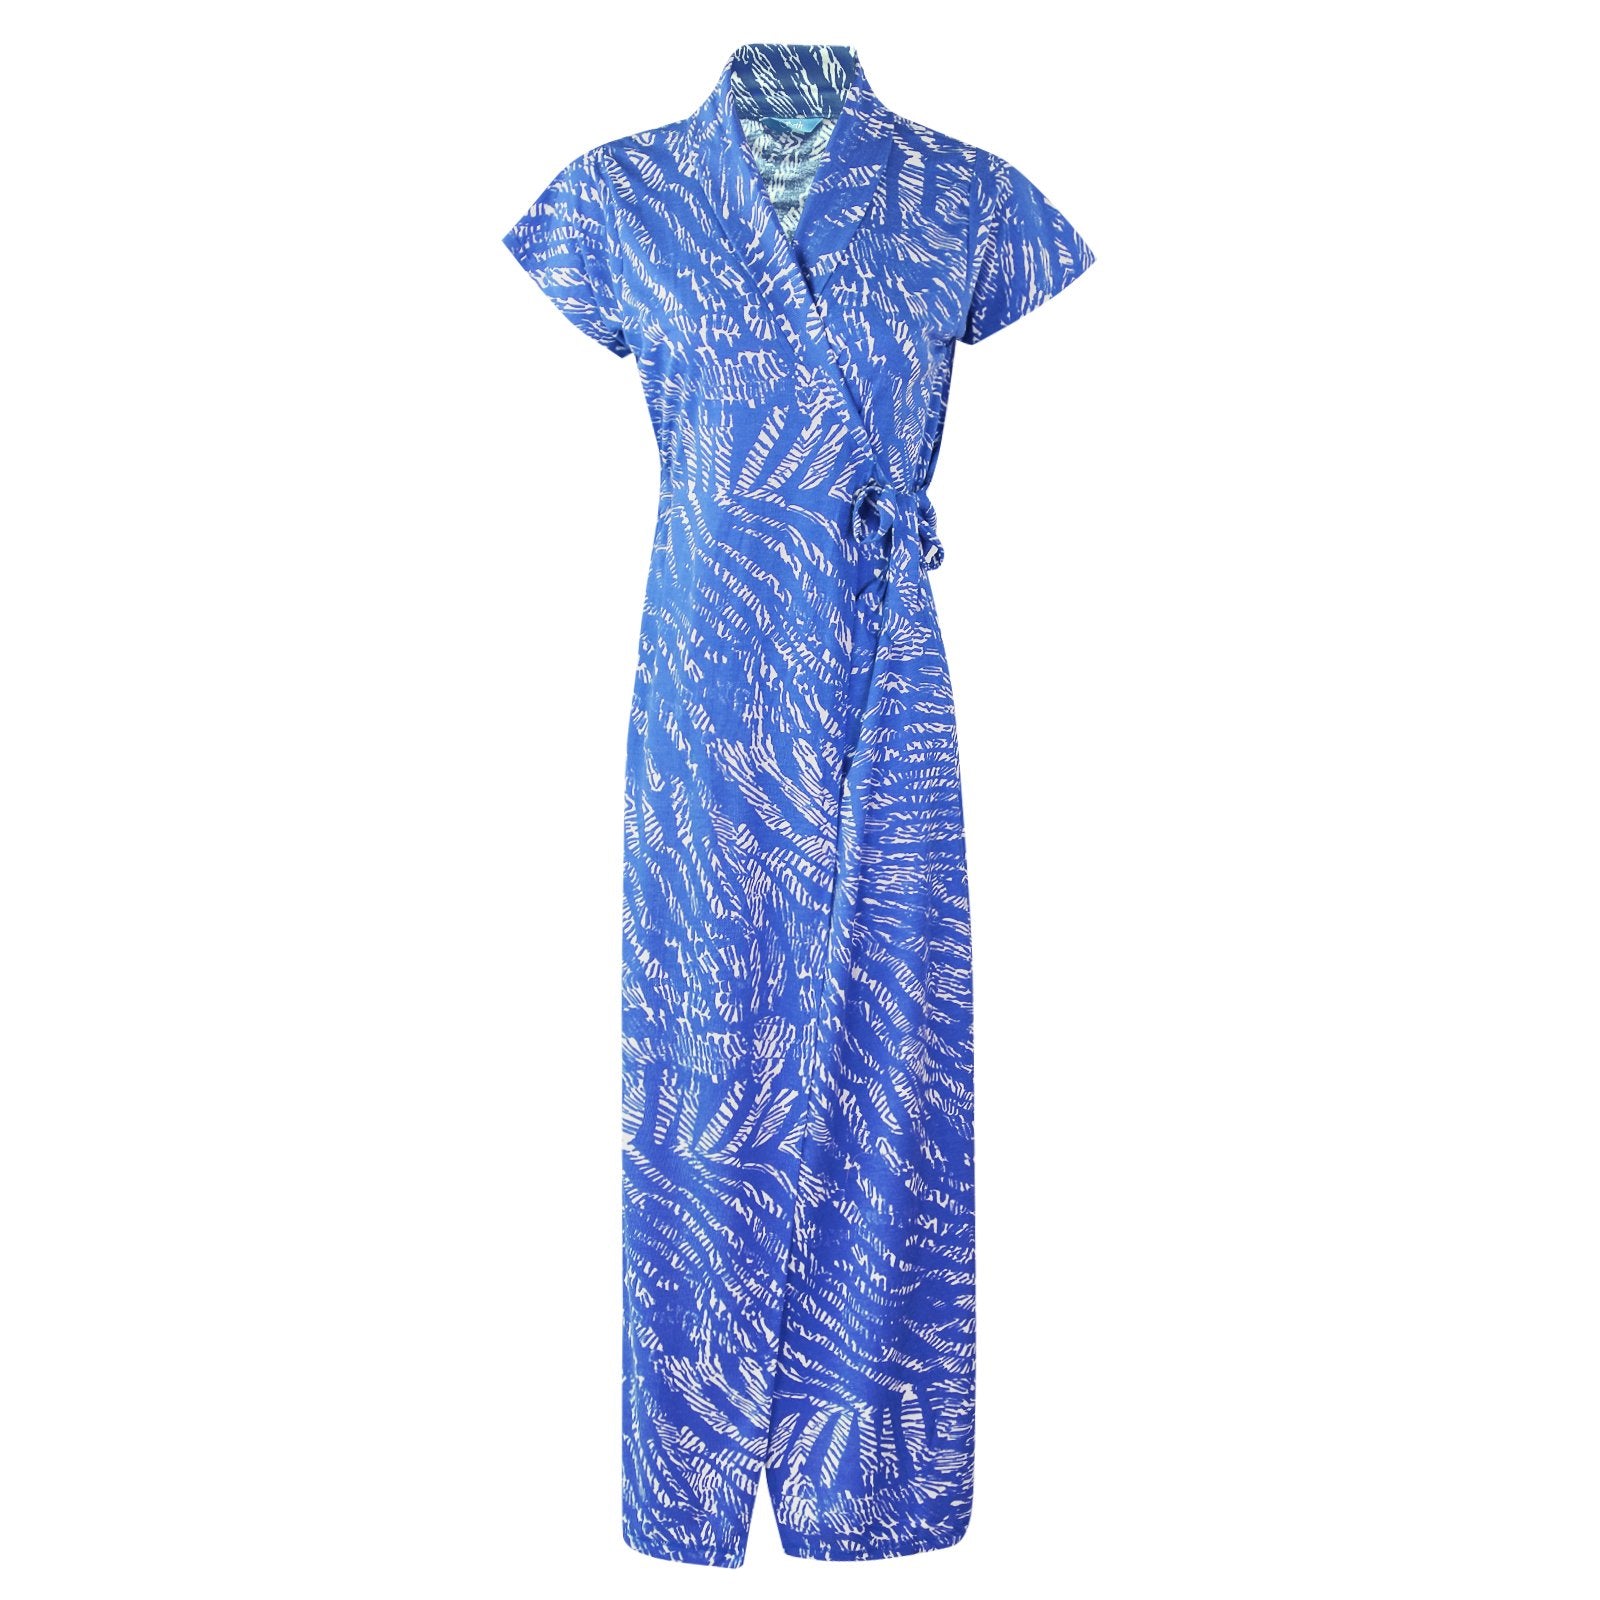 Blue 1 / One Size Animal Print Cotton Robe / Wrap Gown The Orange Tags